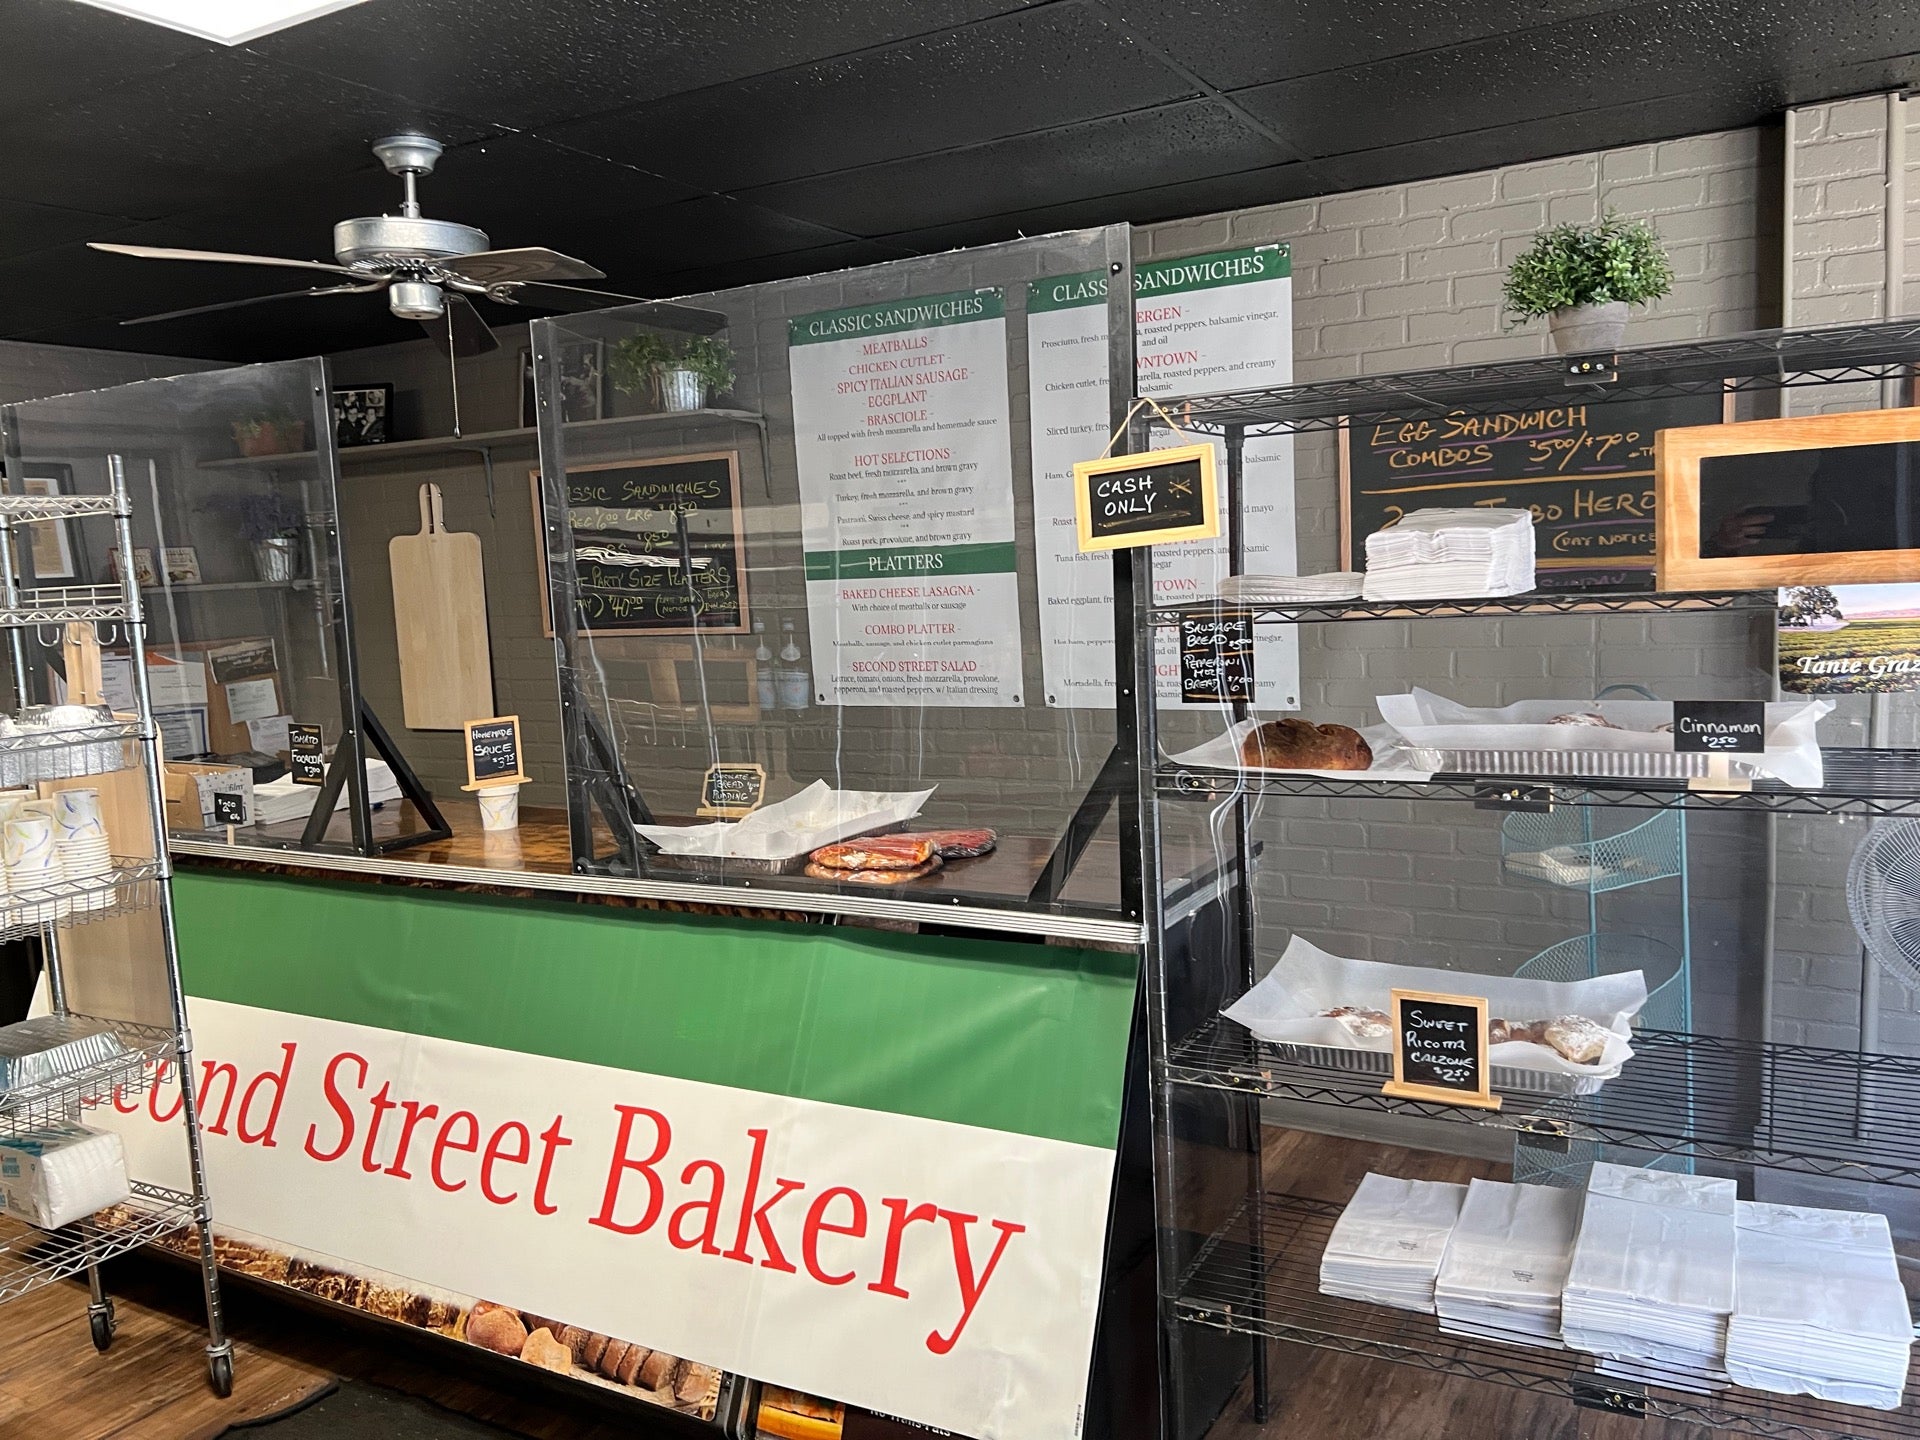 Second Street Bakery